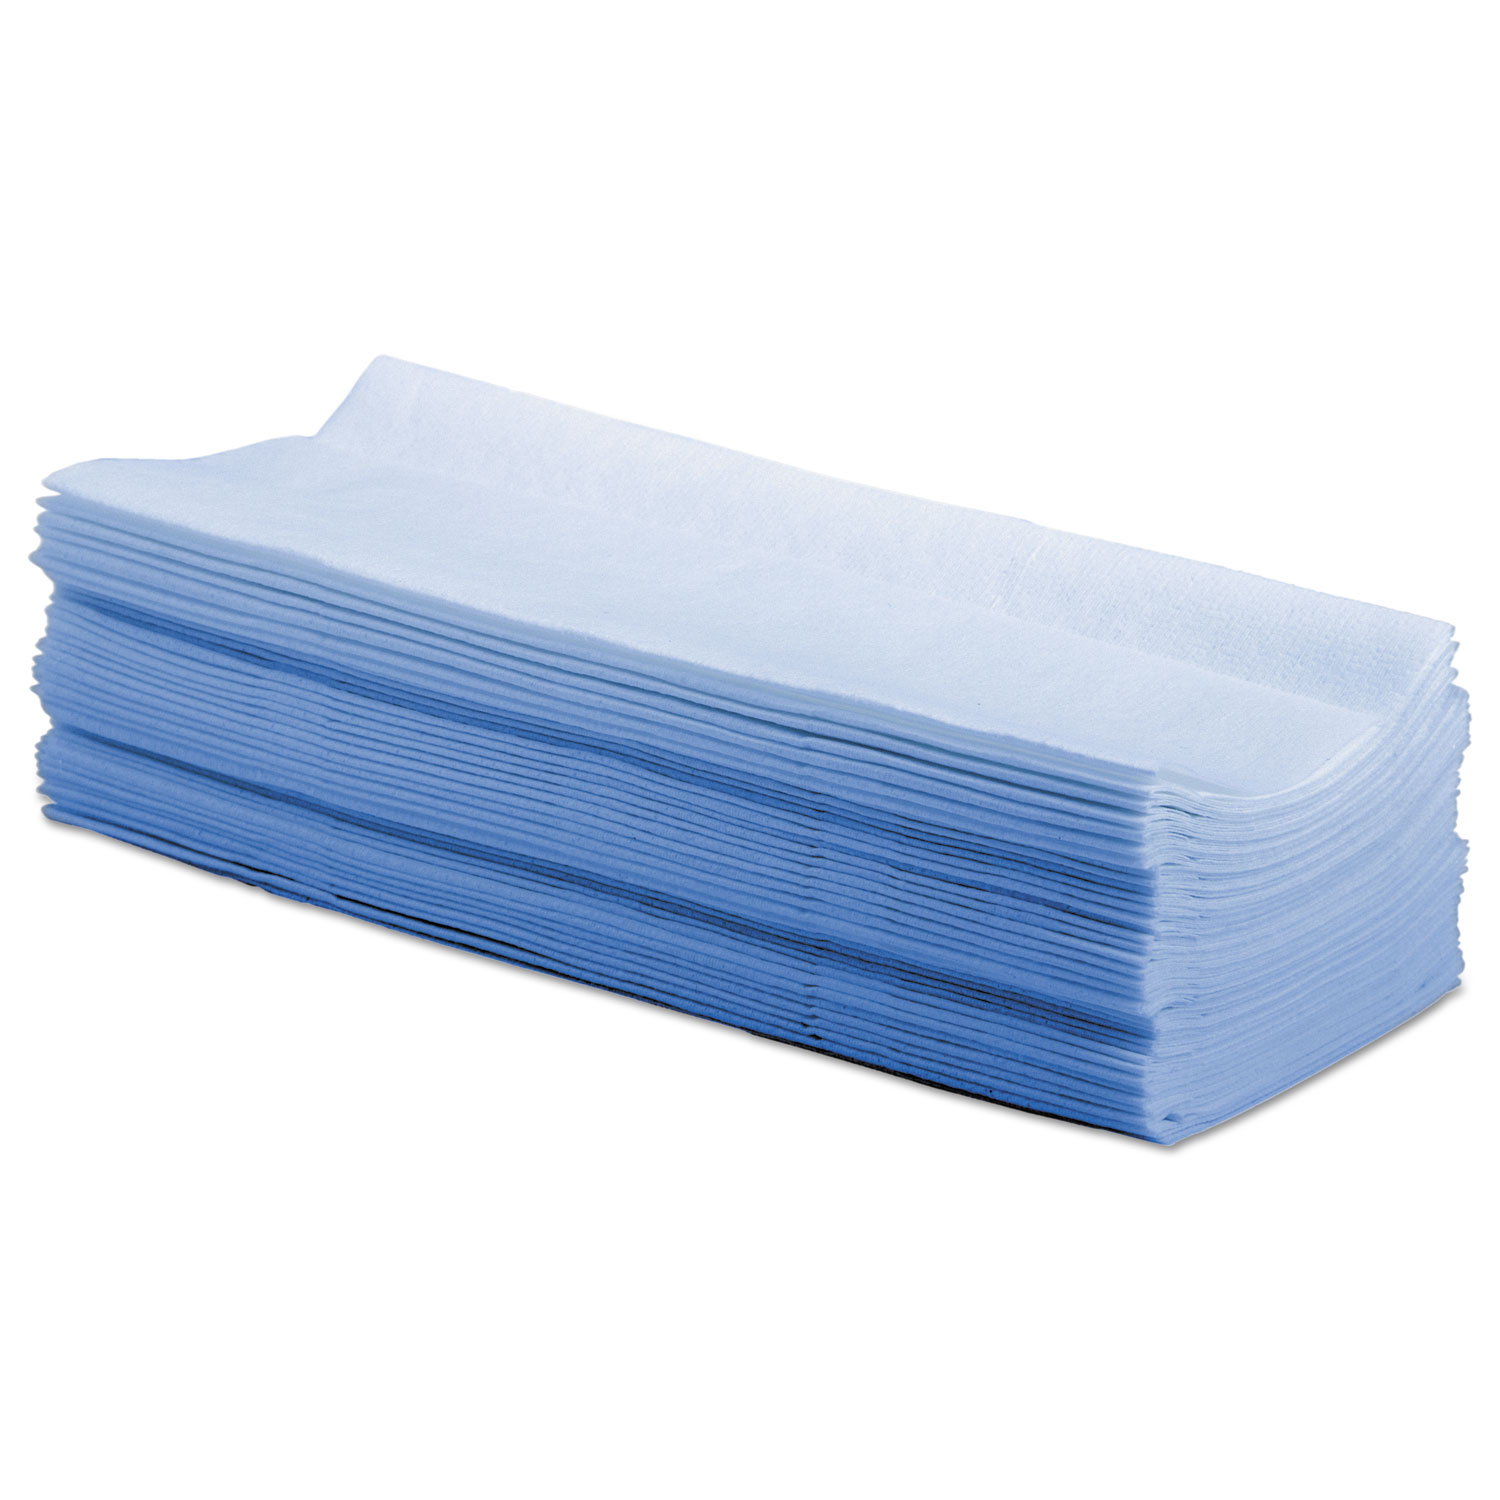 Hydrospun Wipers, Blue, 9 x 16 3/4, 10 Pack Dispensers of 100, 000/Carton